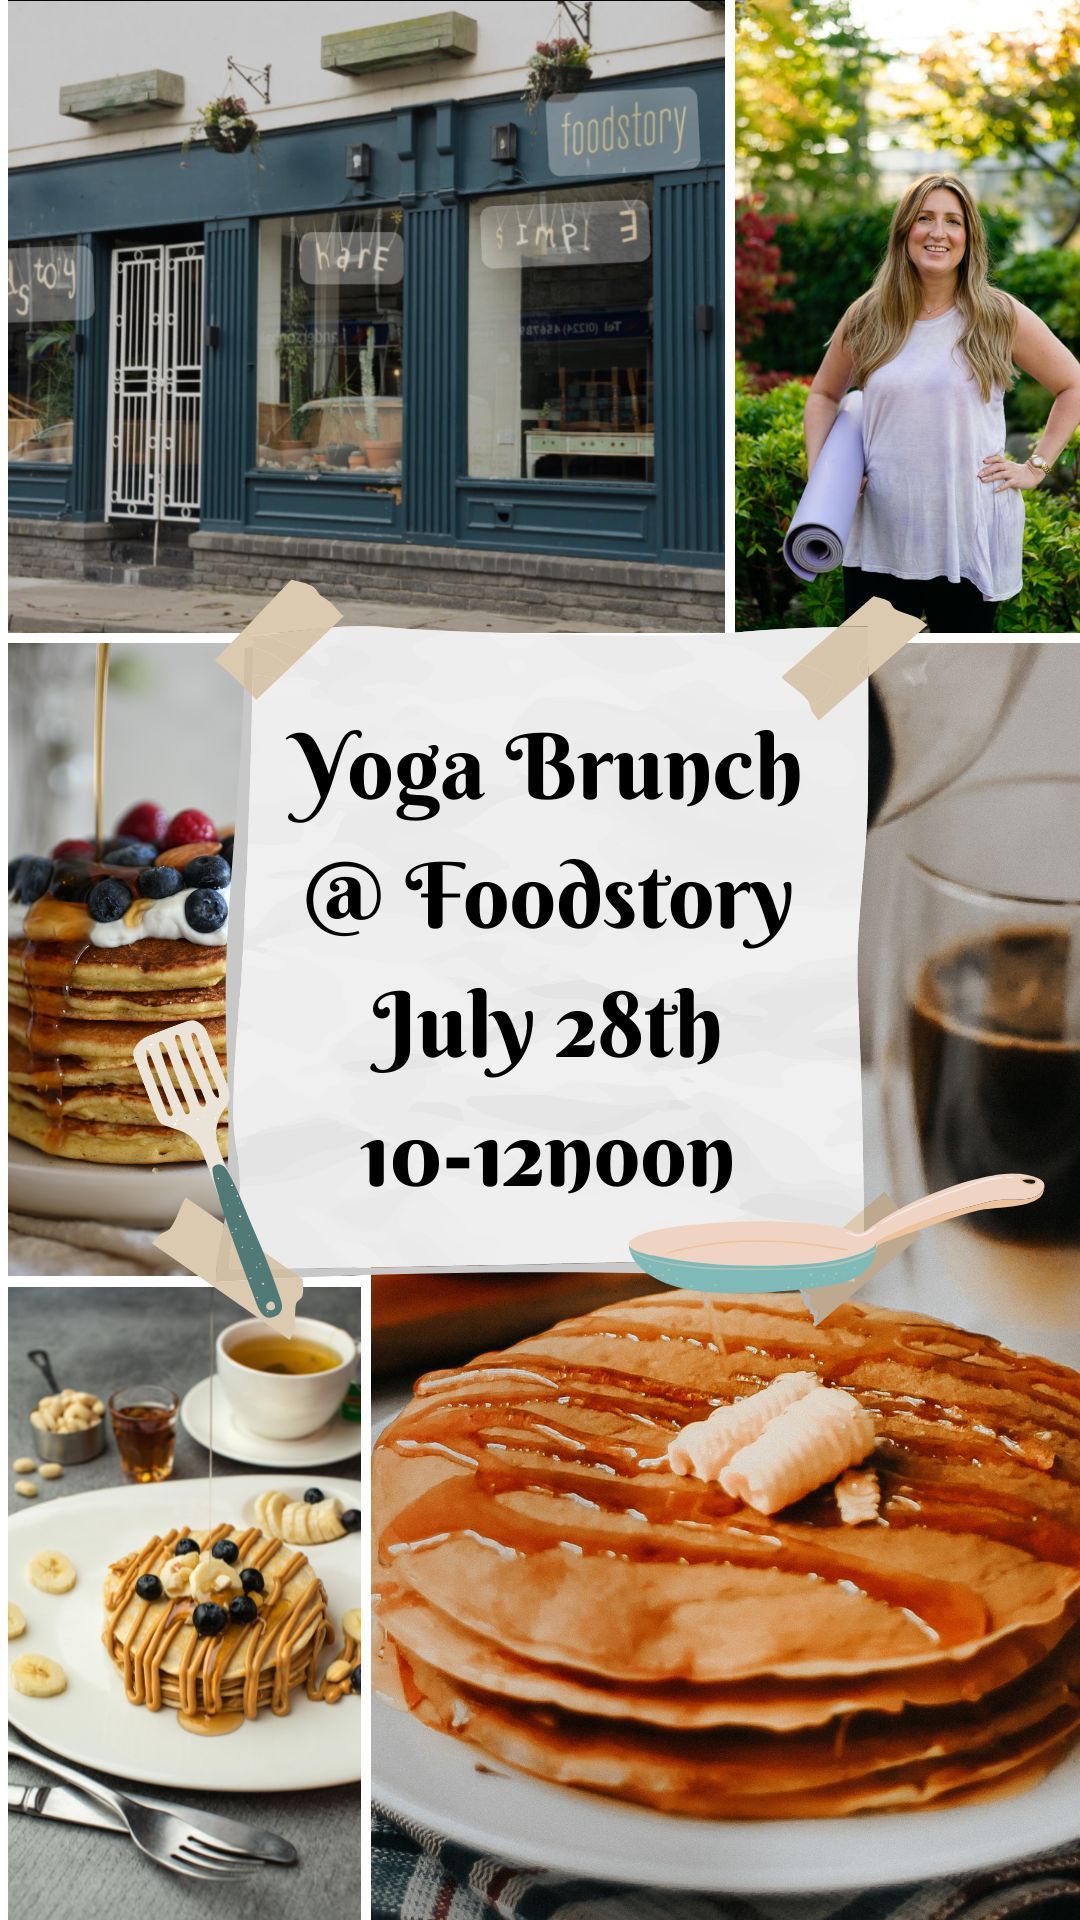 Yoga Brunch @ Foodstory - Sunday 28th July - 10-12noon